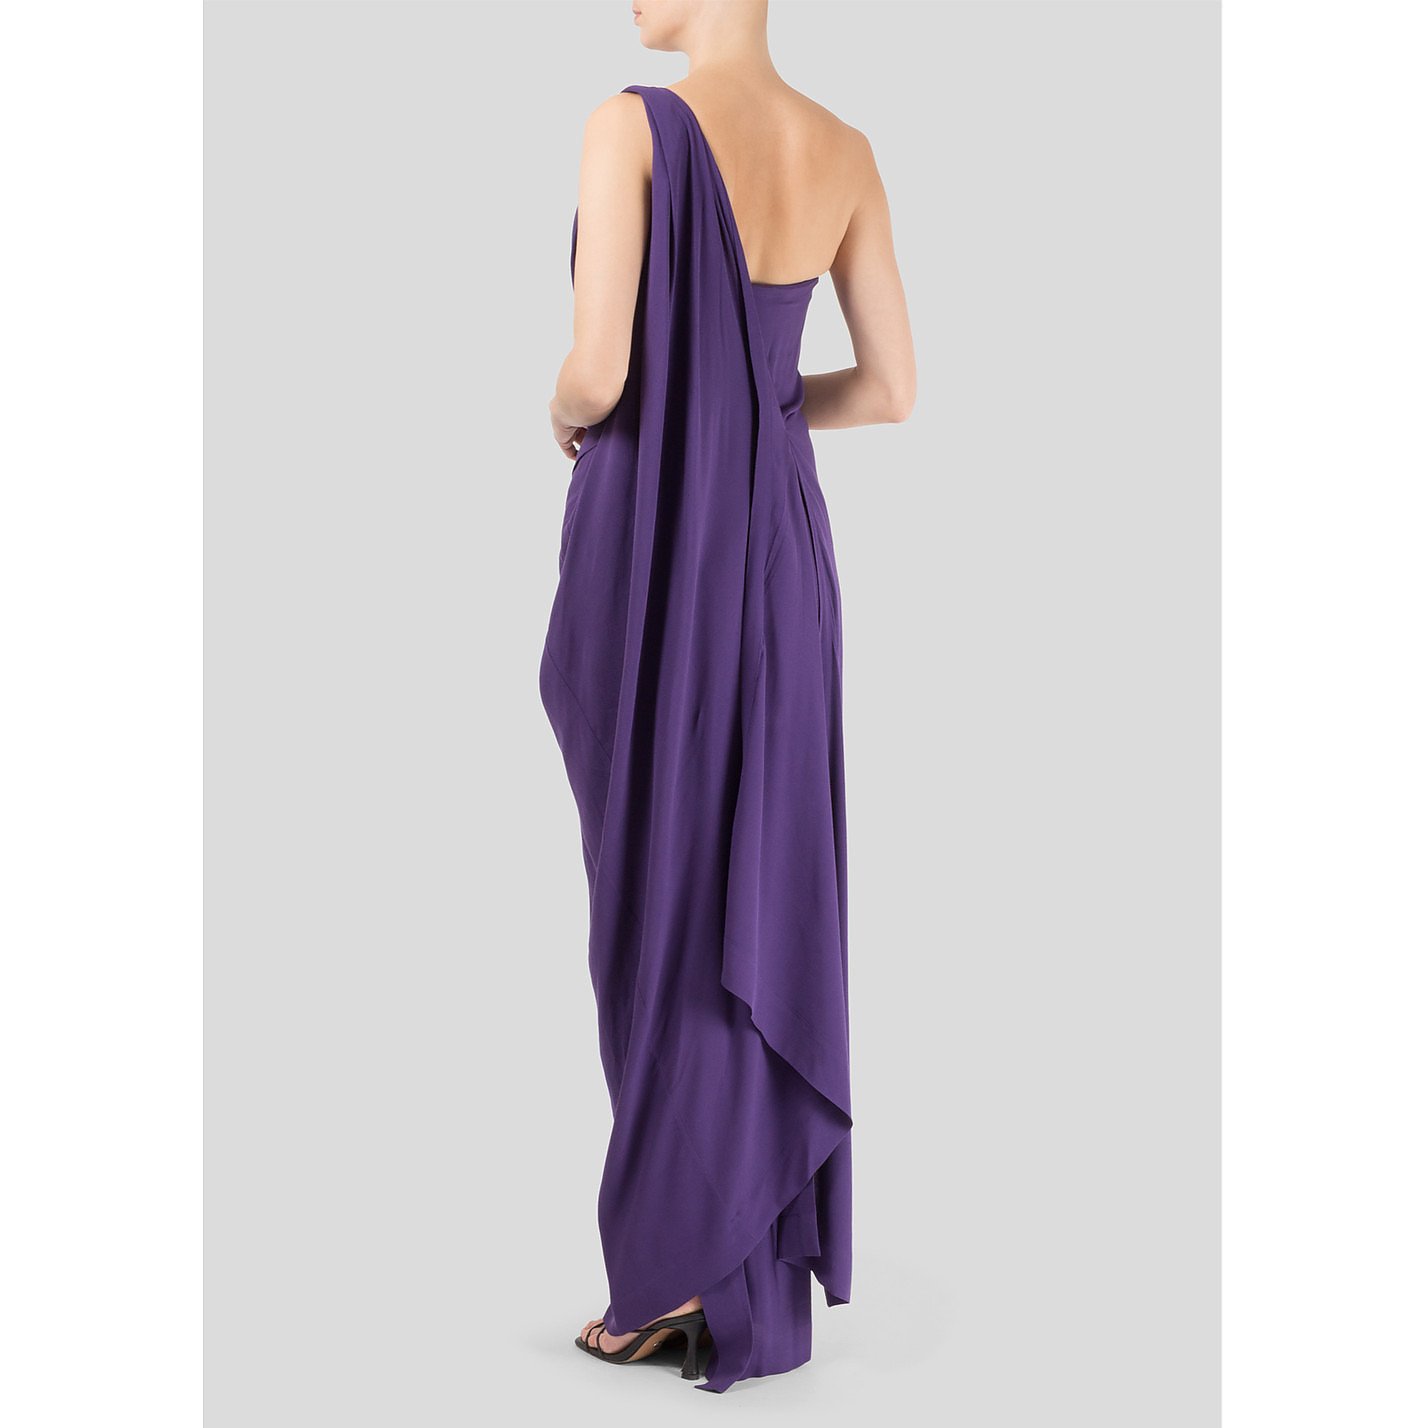 Vivienne Westwood Toga Dress